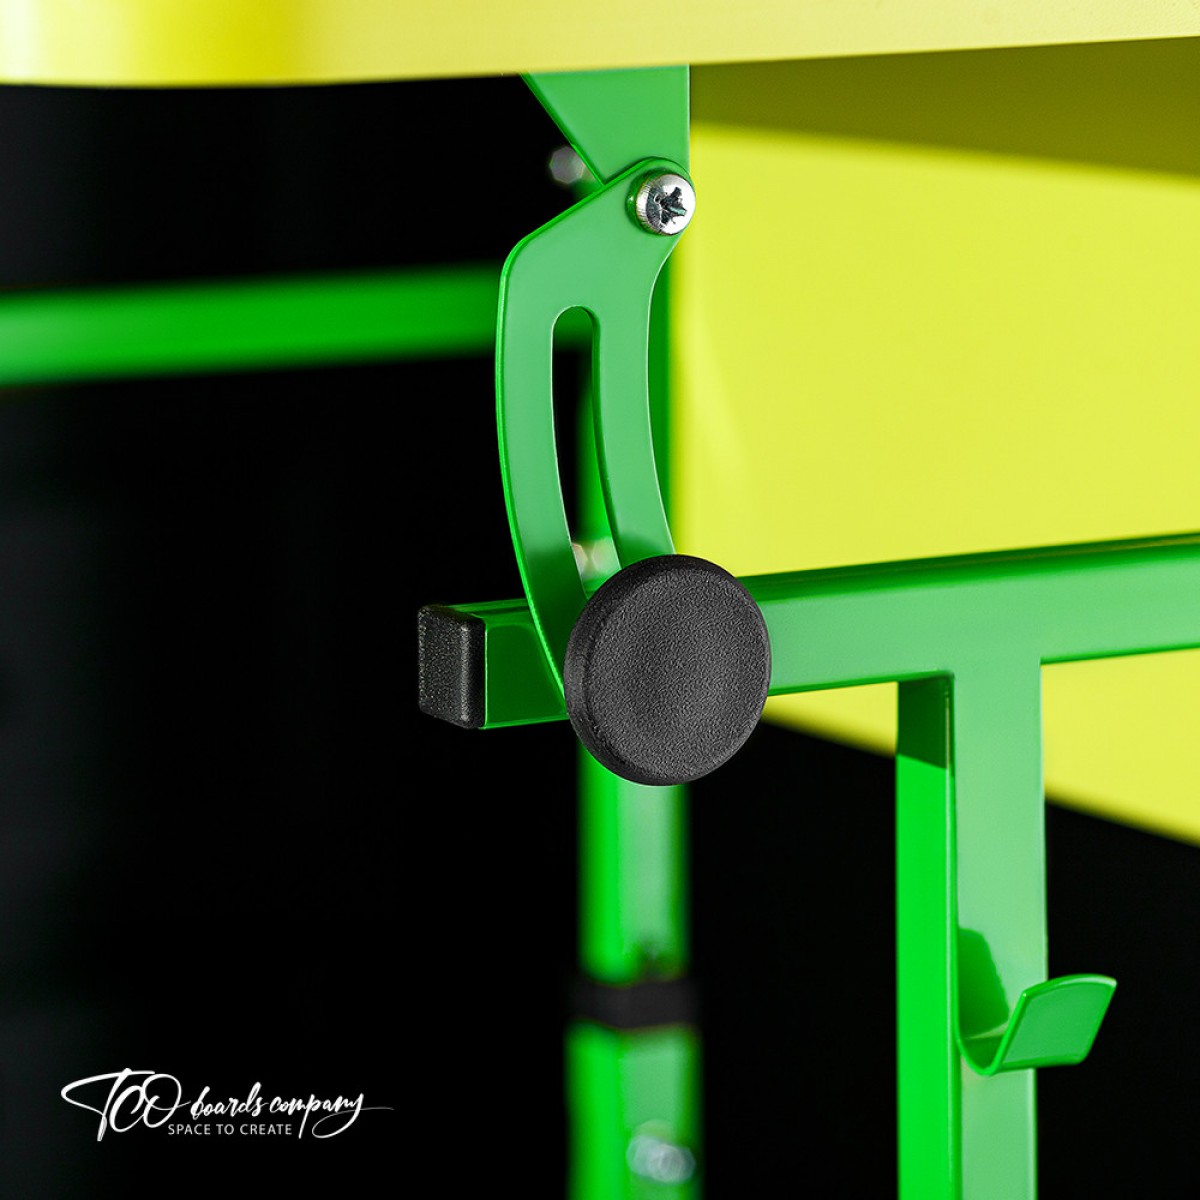 Set of school desk + chair single (green color)